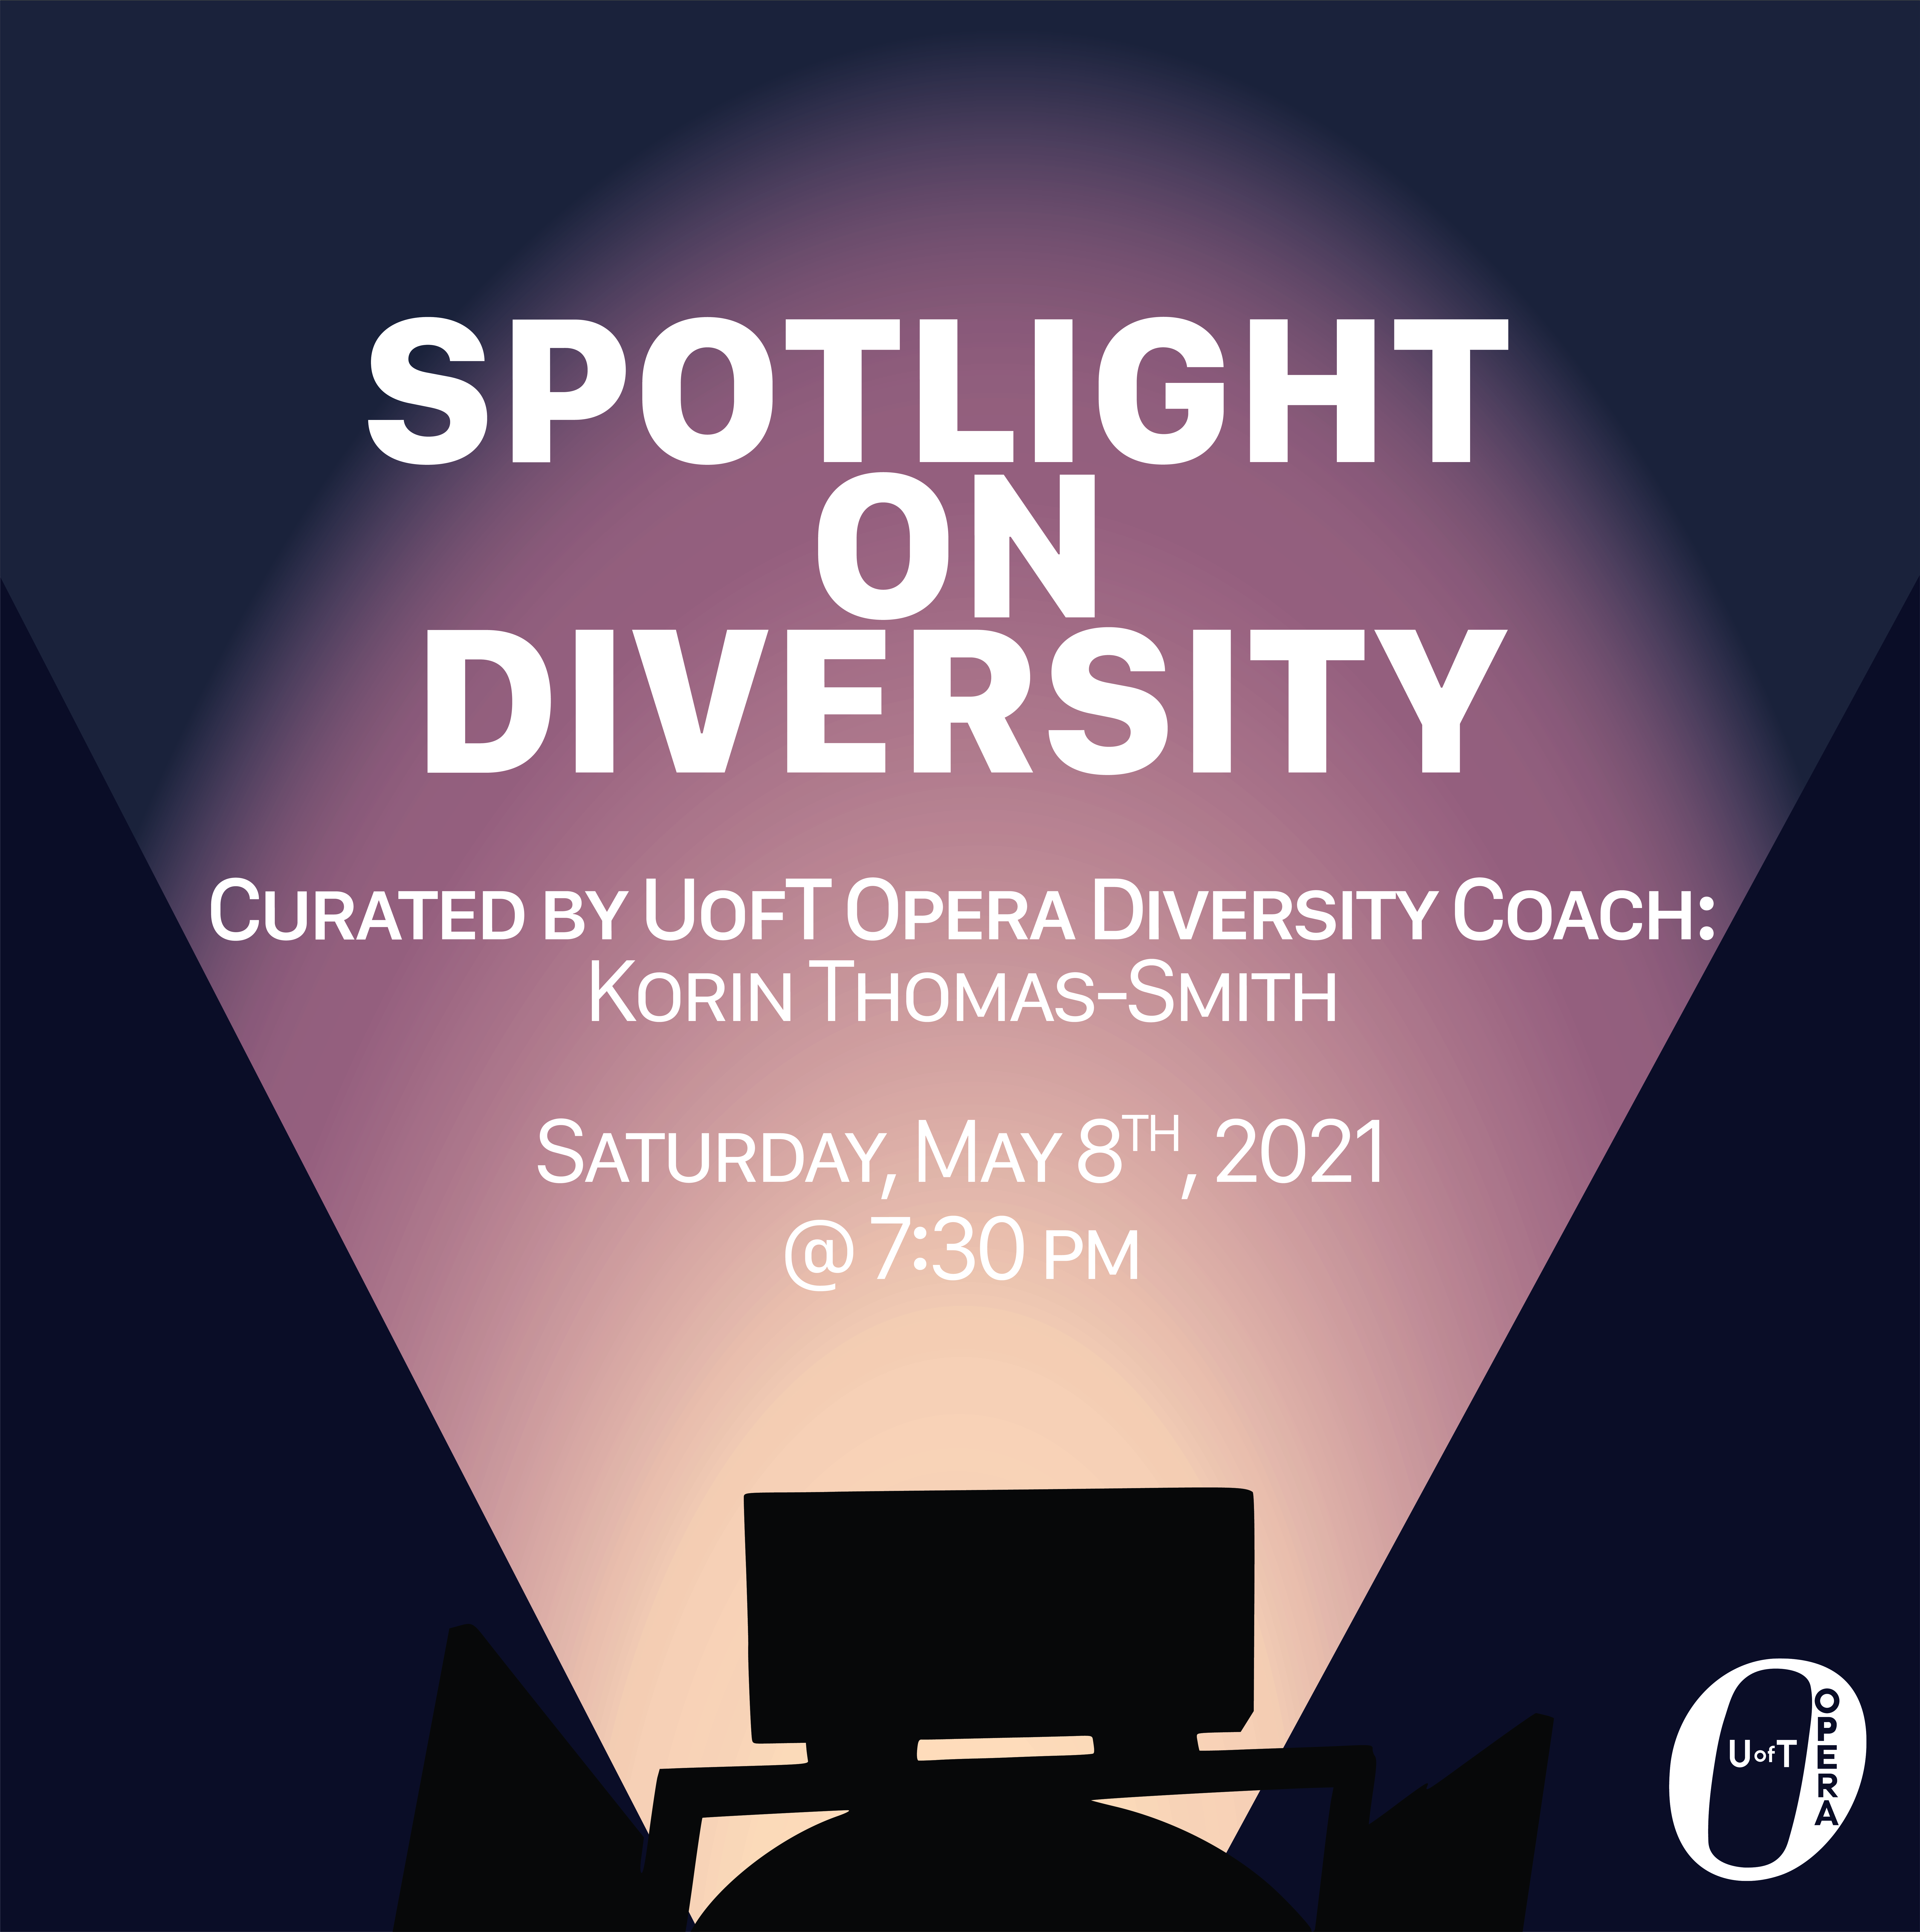 U of T Opera presents Spotlight on Diversity, curated by Korin Thomas-Smith